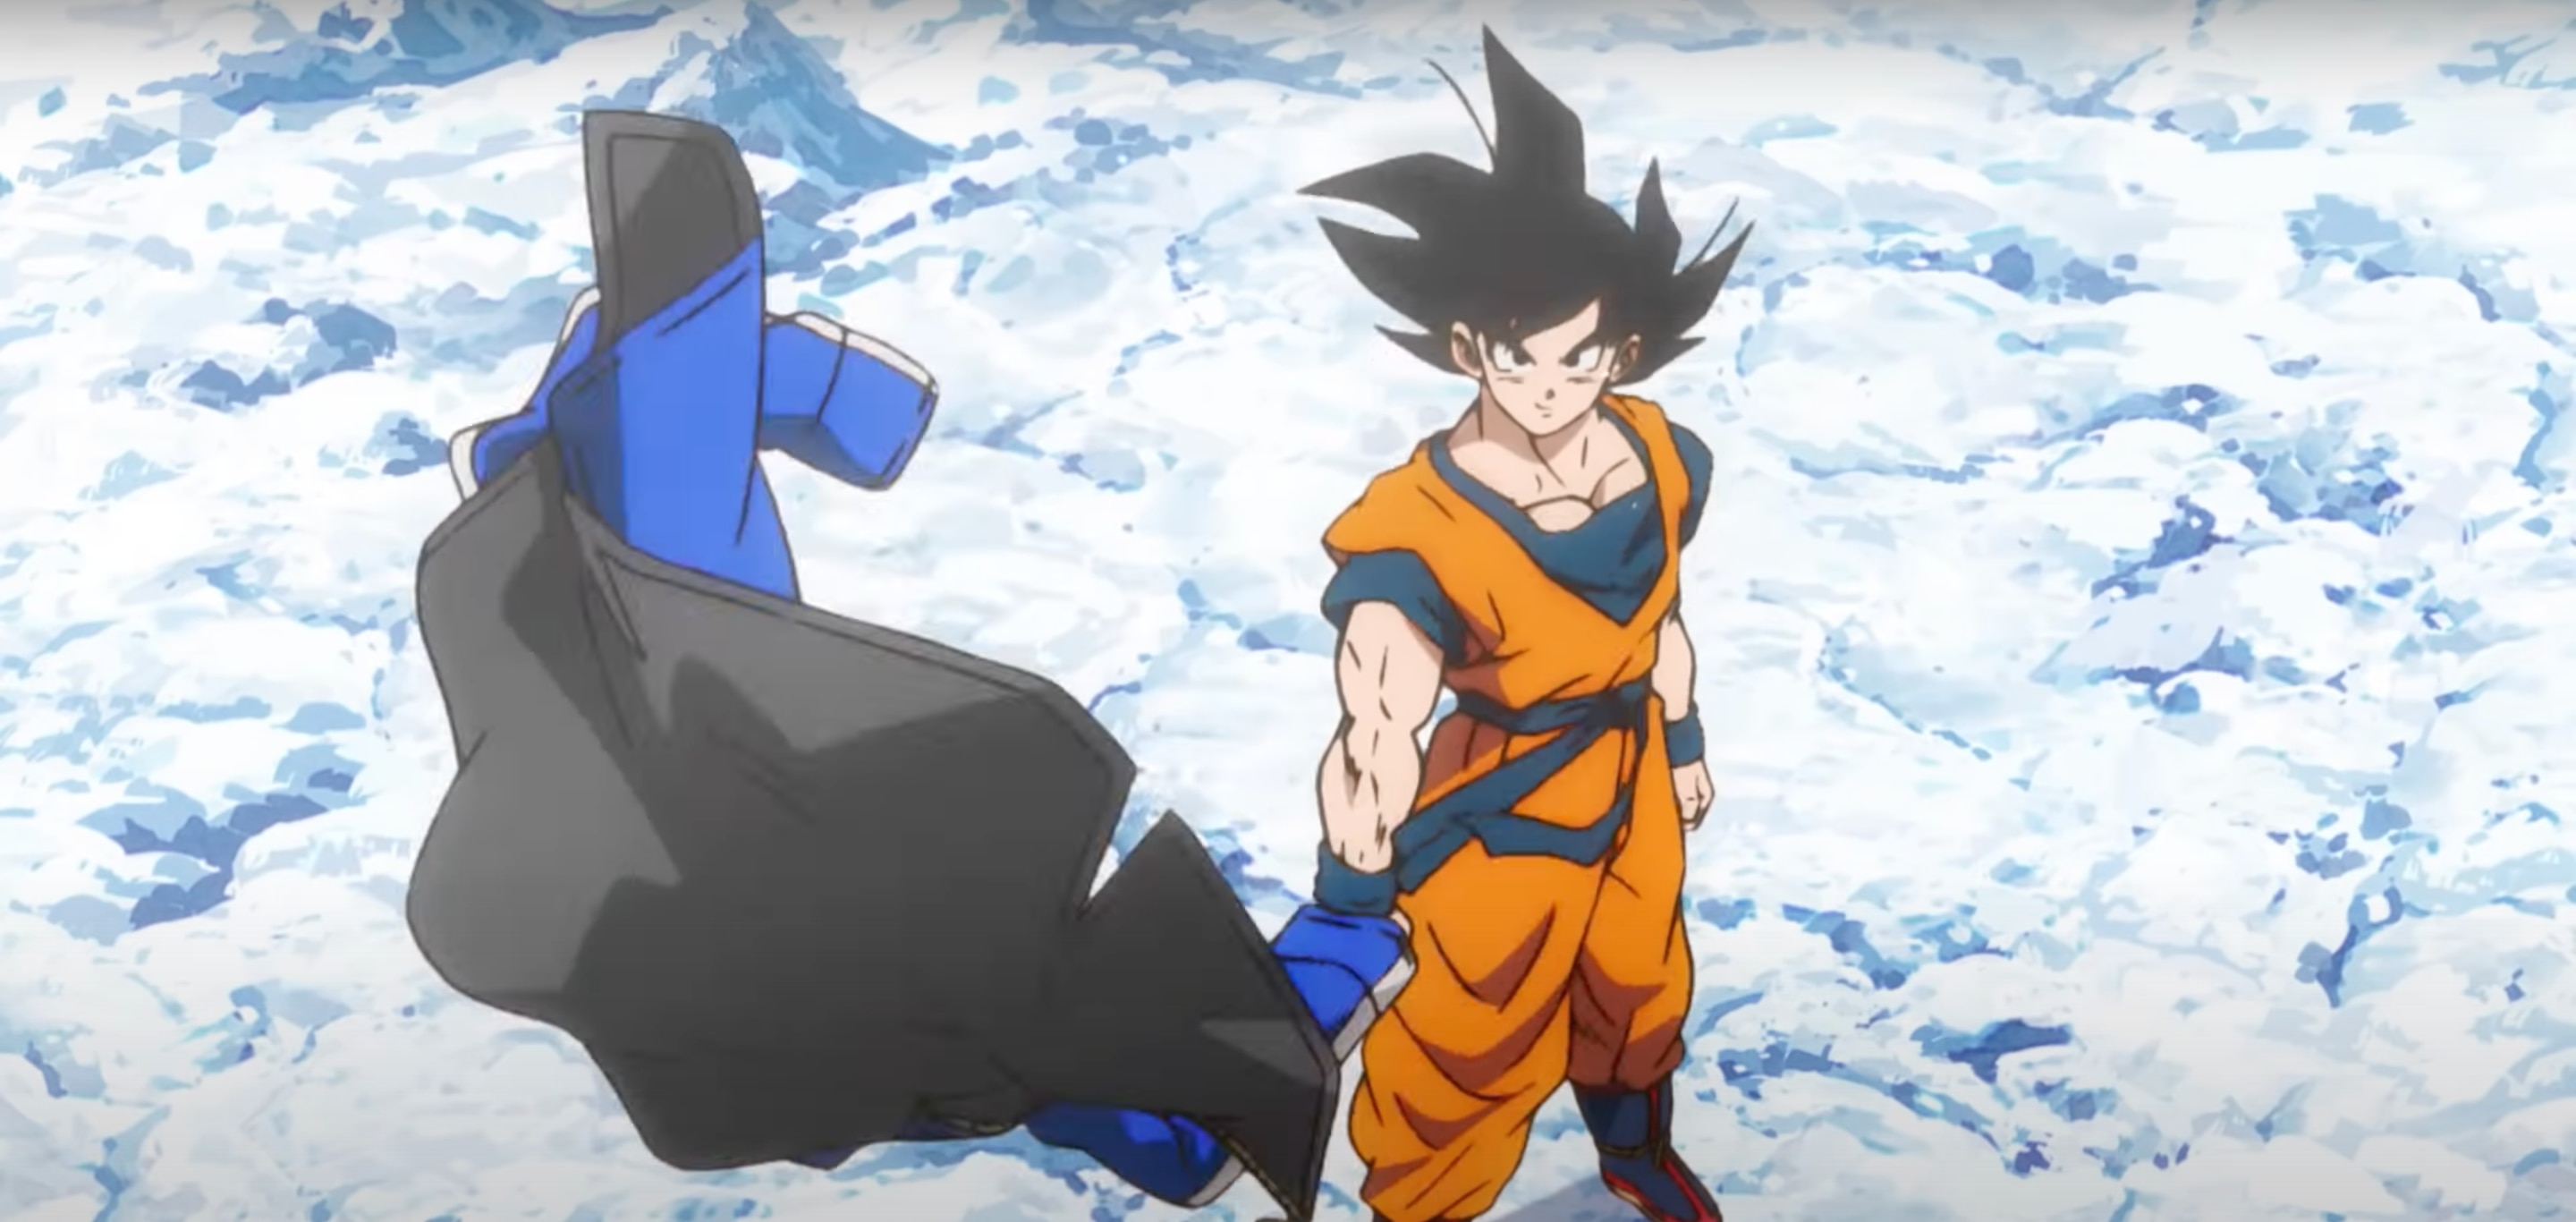 Dragon Ball Super: Super Hero is 5th Highest Grossing Anime Film